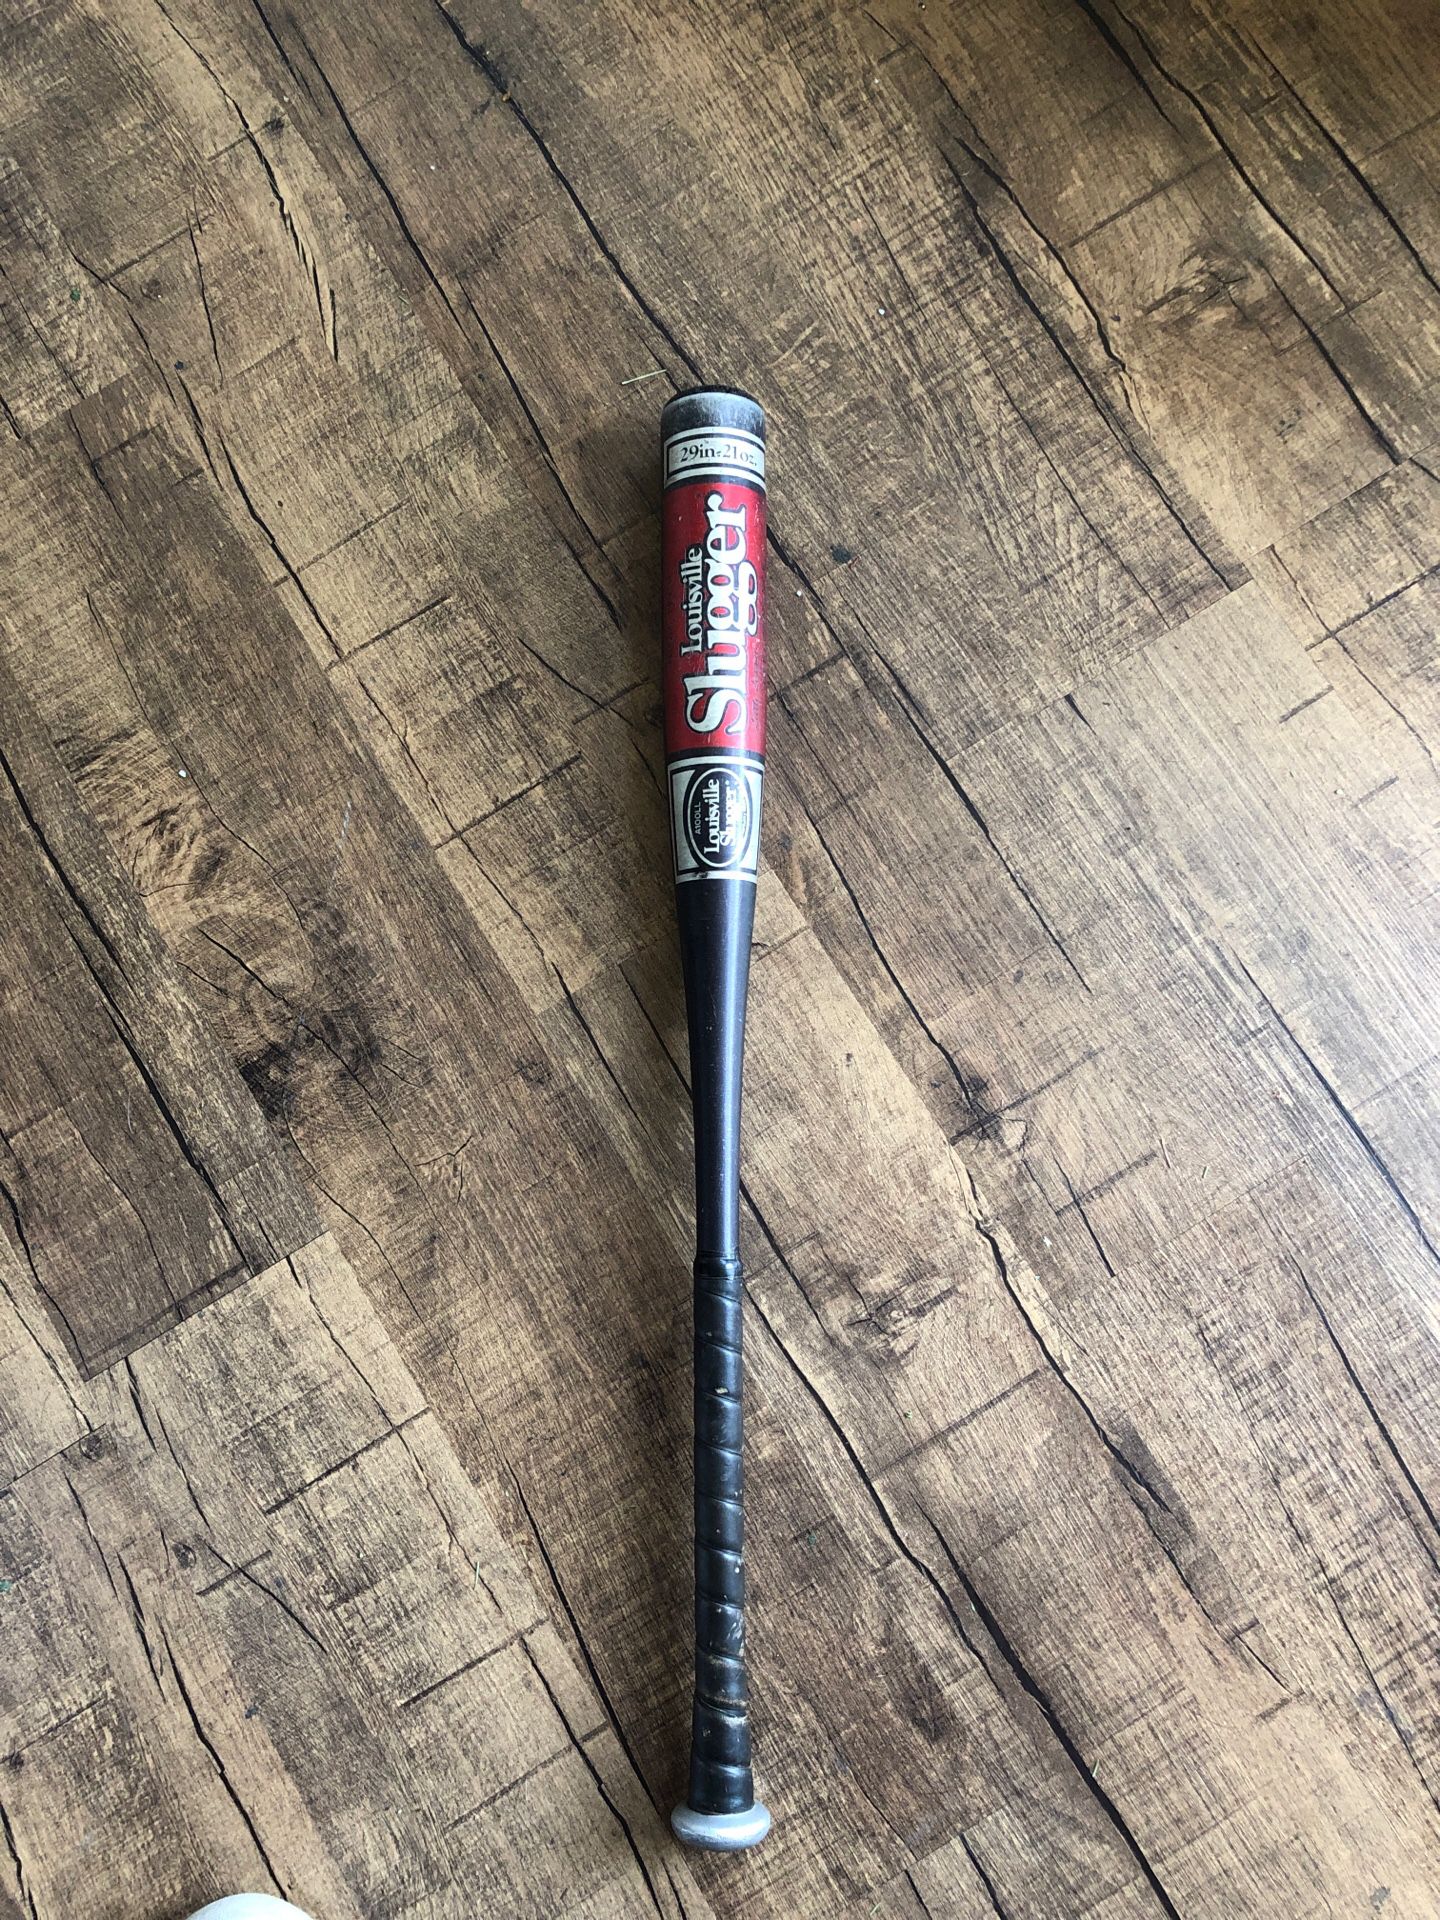 Louisville slugger little league baseball bat used